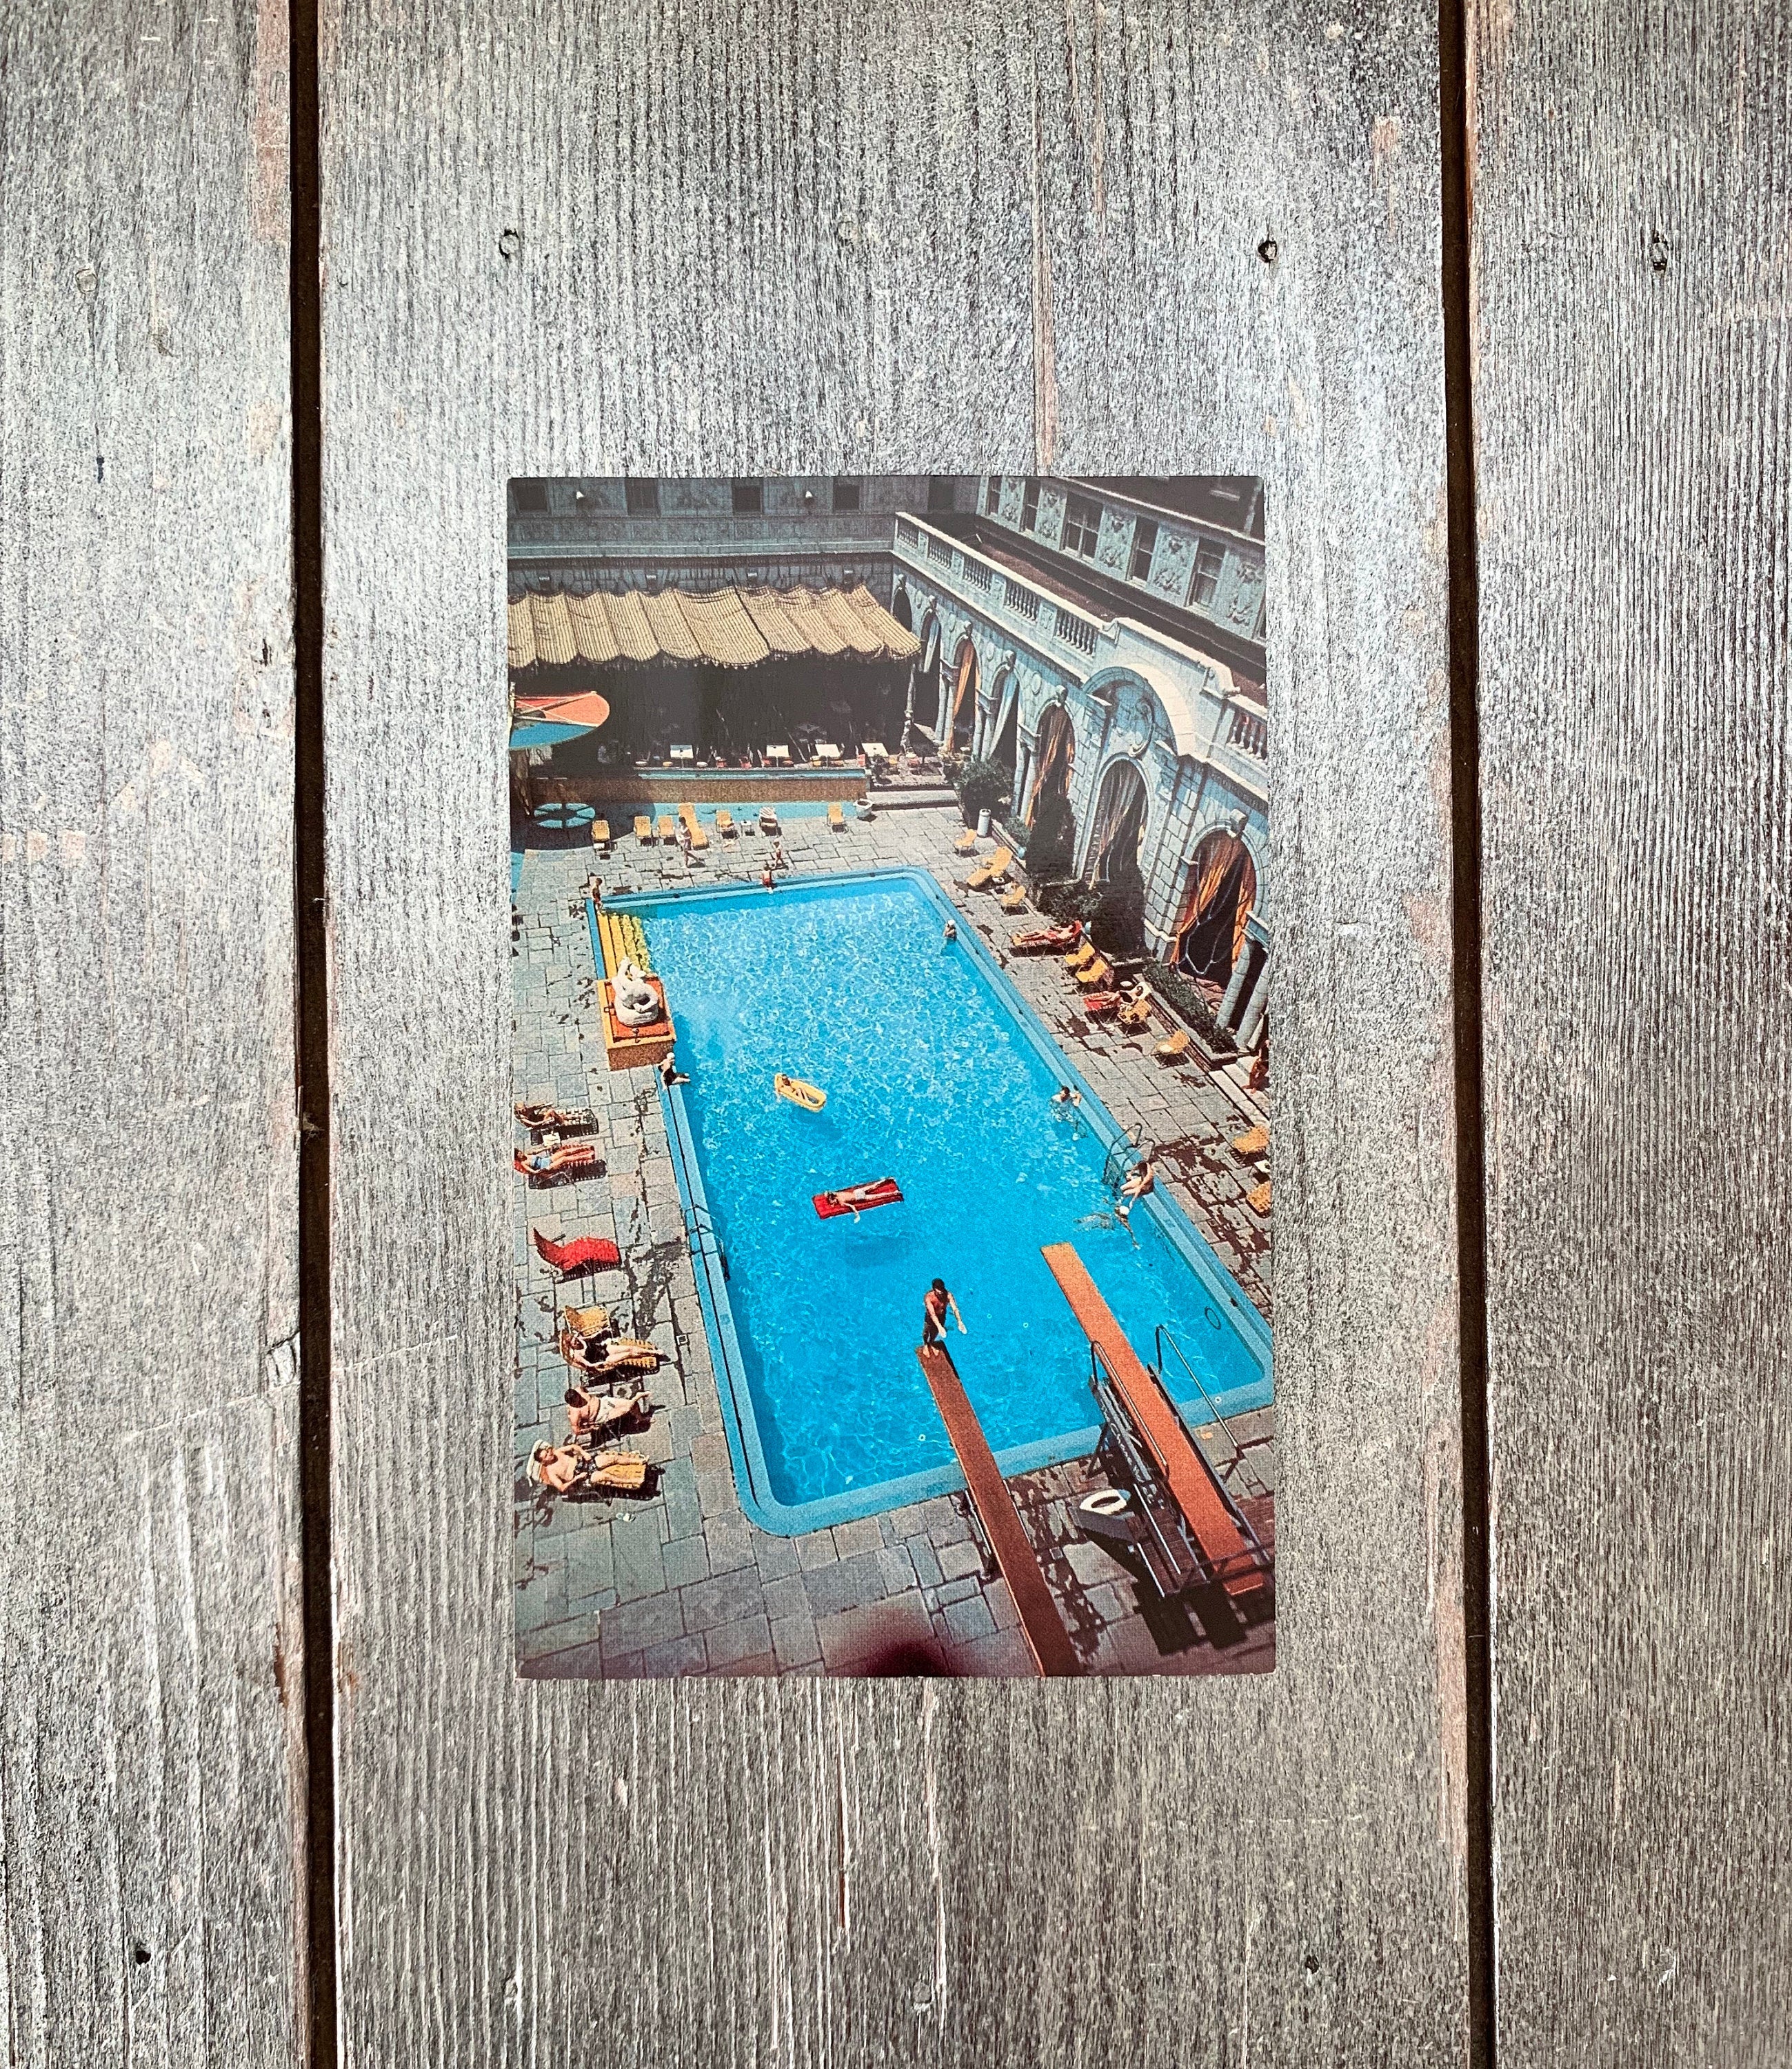 Retro Vintage Postcard, "The Sun and Swim Club Pool, Chase-Park Plaza Hotel", Saint Louis, Missouri